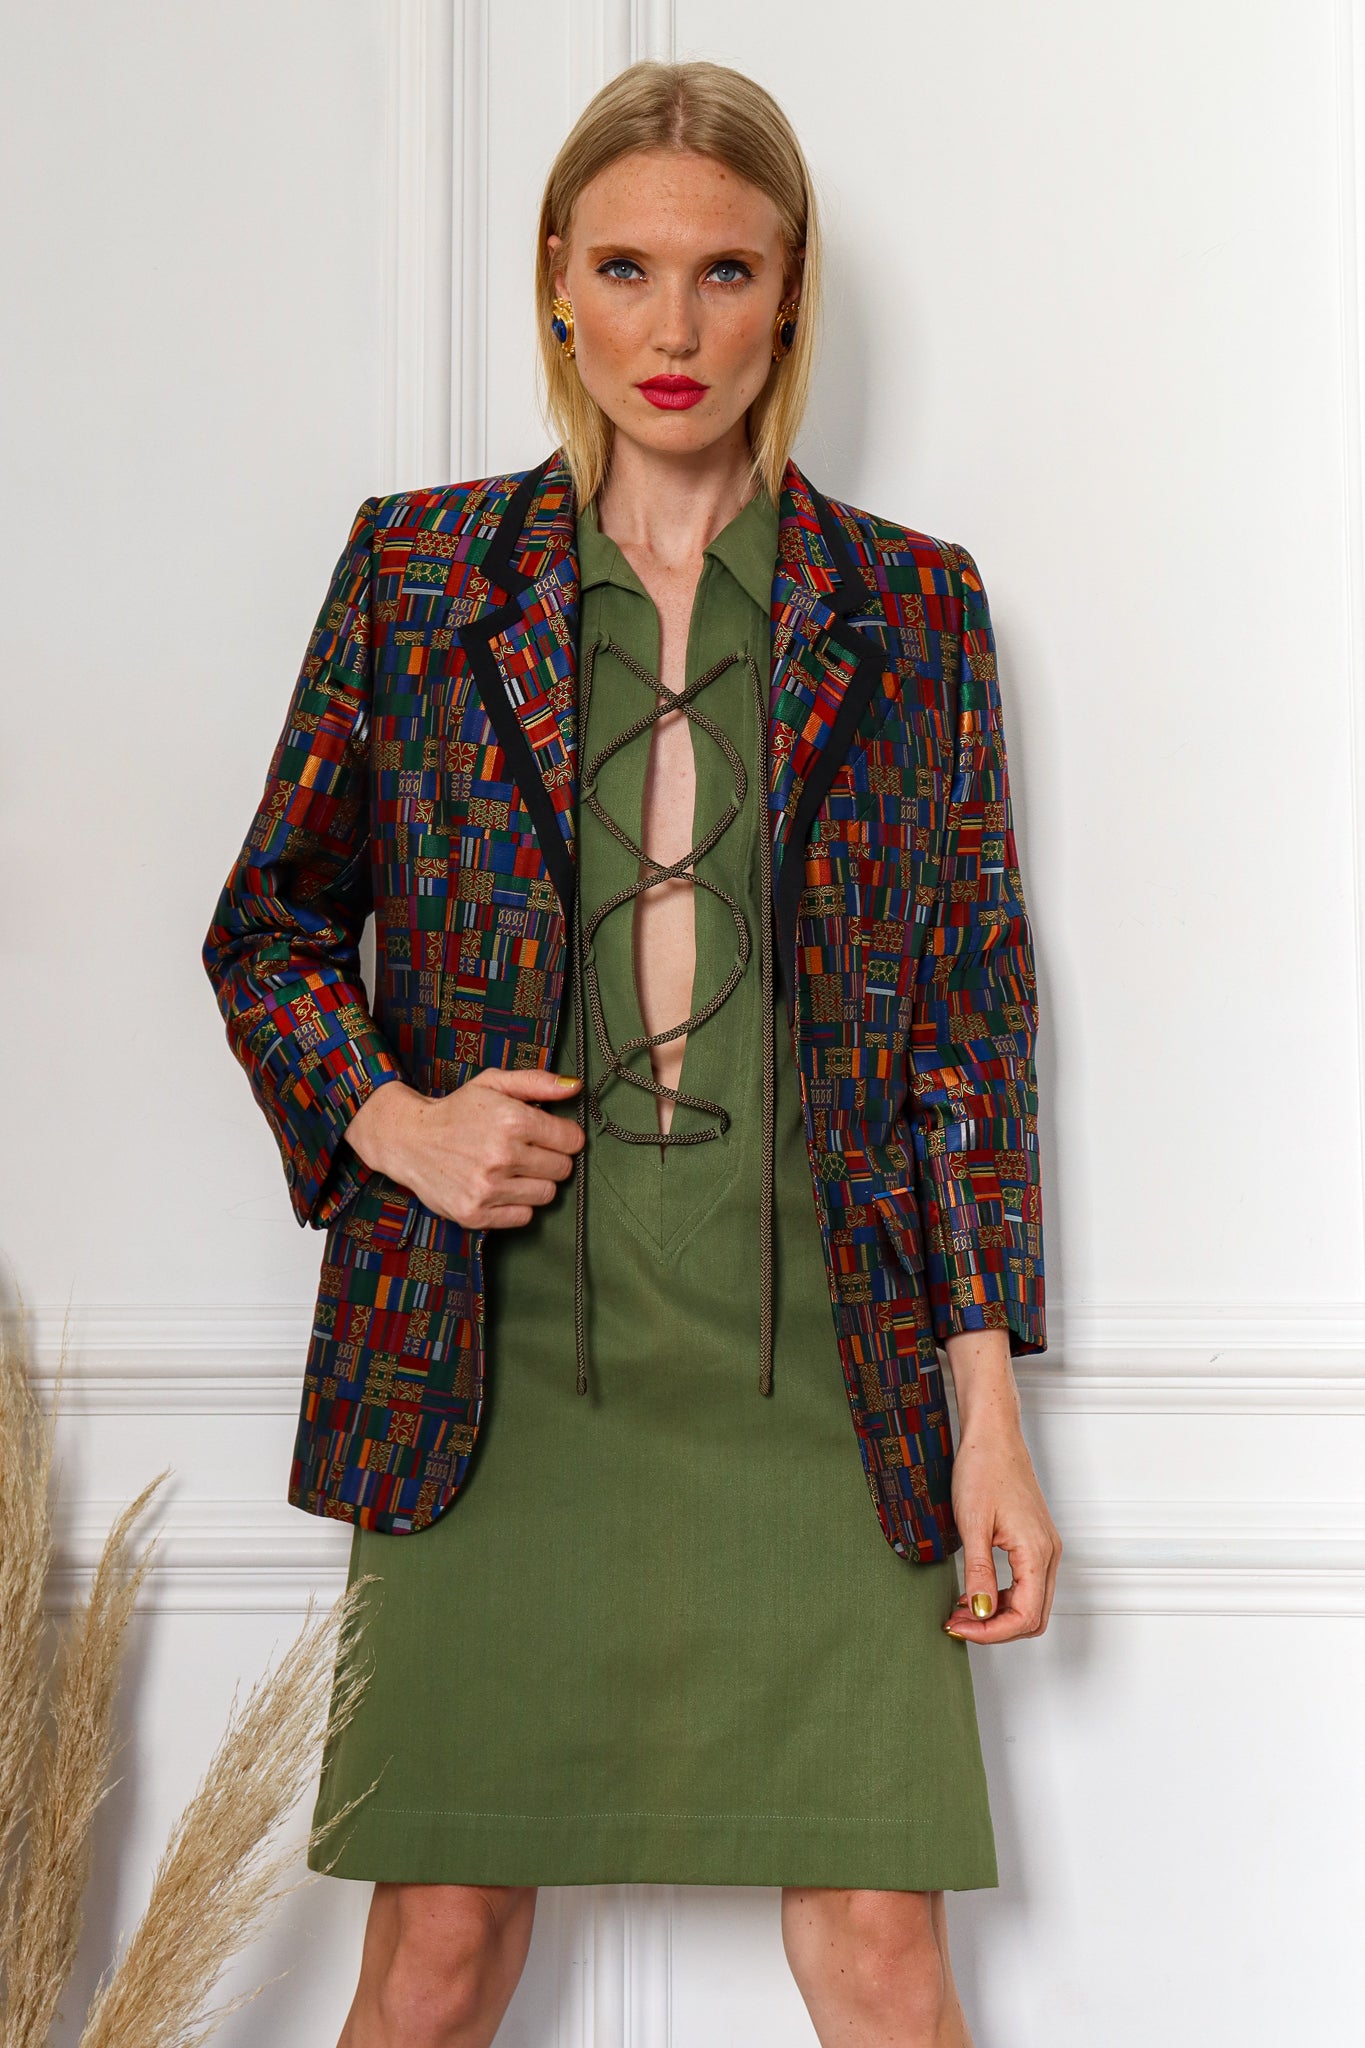 Miranda in YSL 1990 Safari Lace-Up Dress & Hermes Mosaic Patchwork Silk Blazer @ Recess Los Angeles